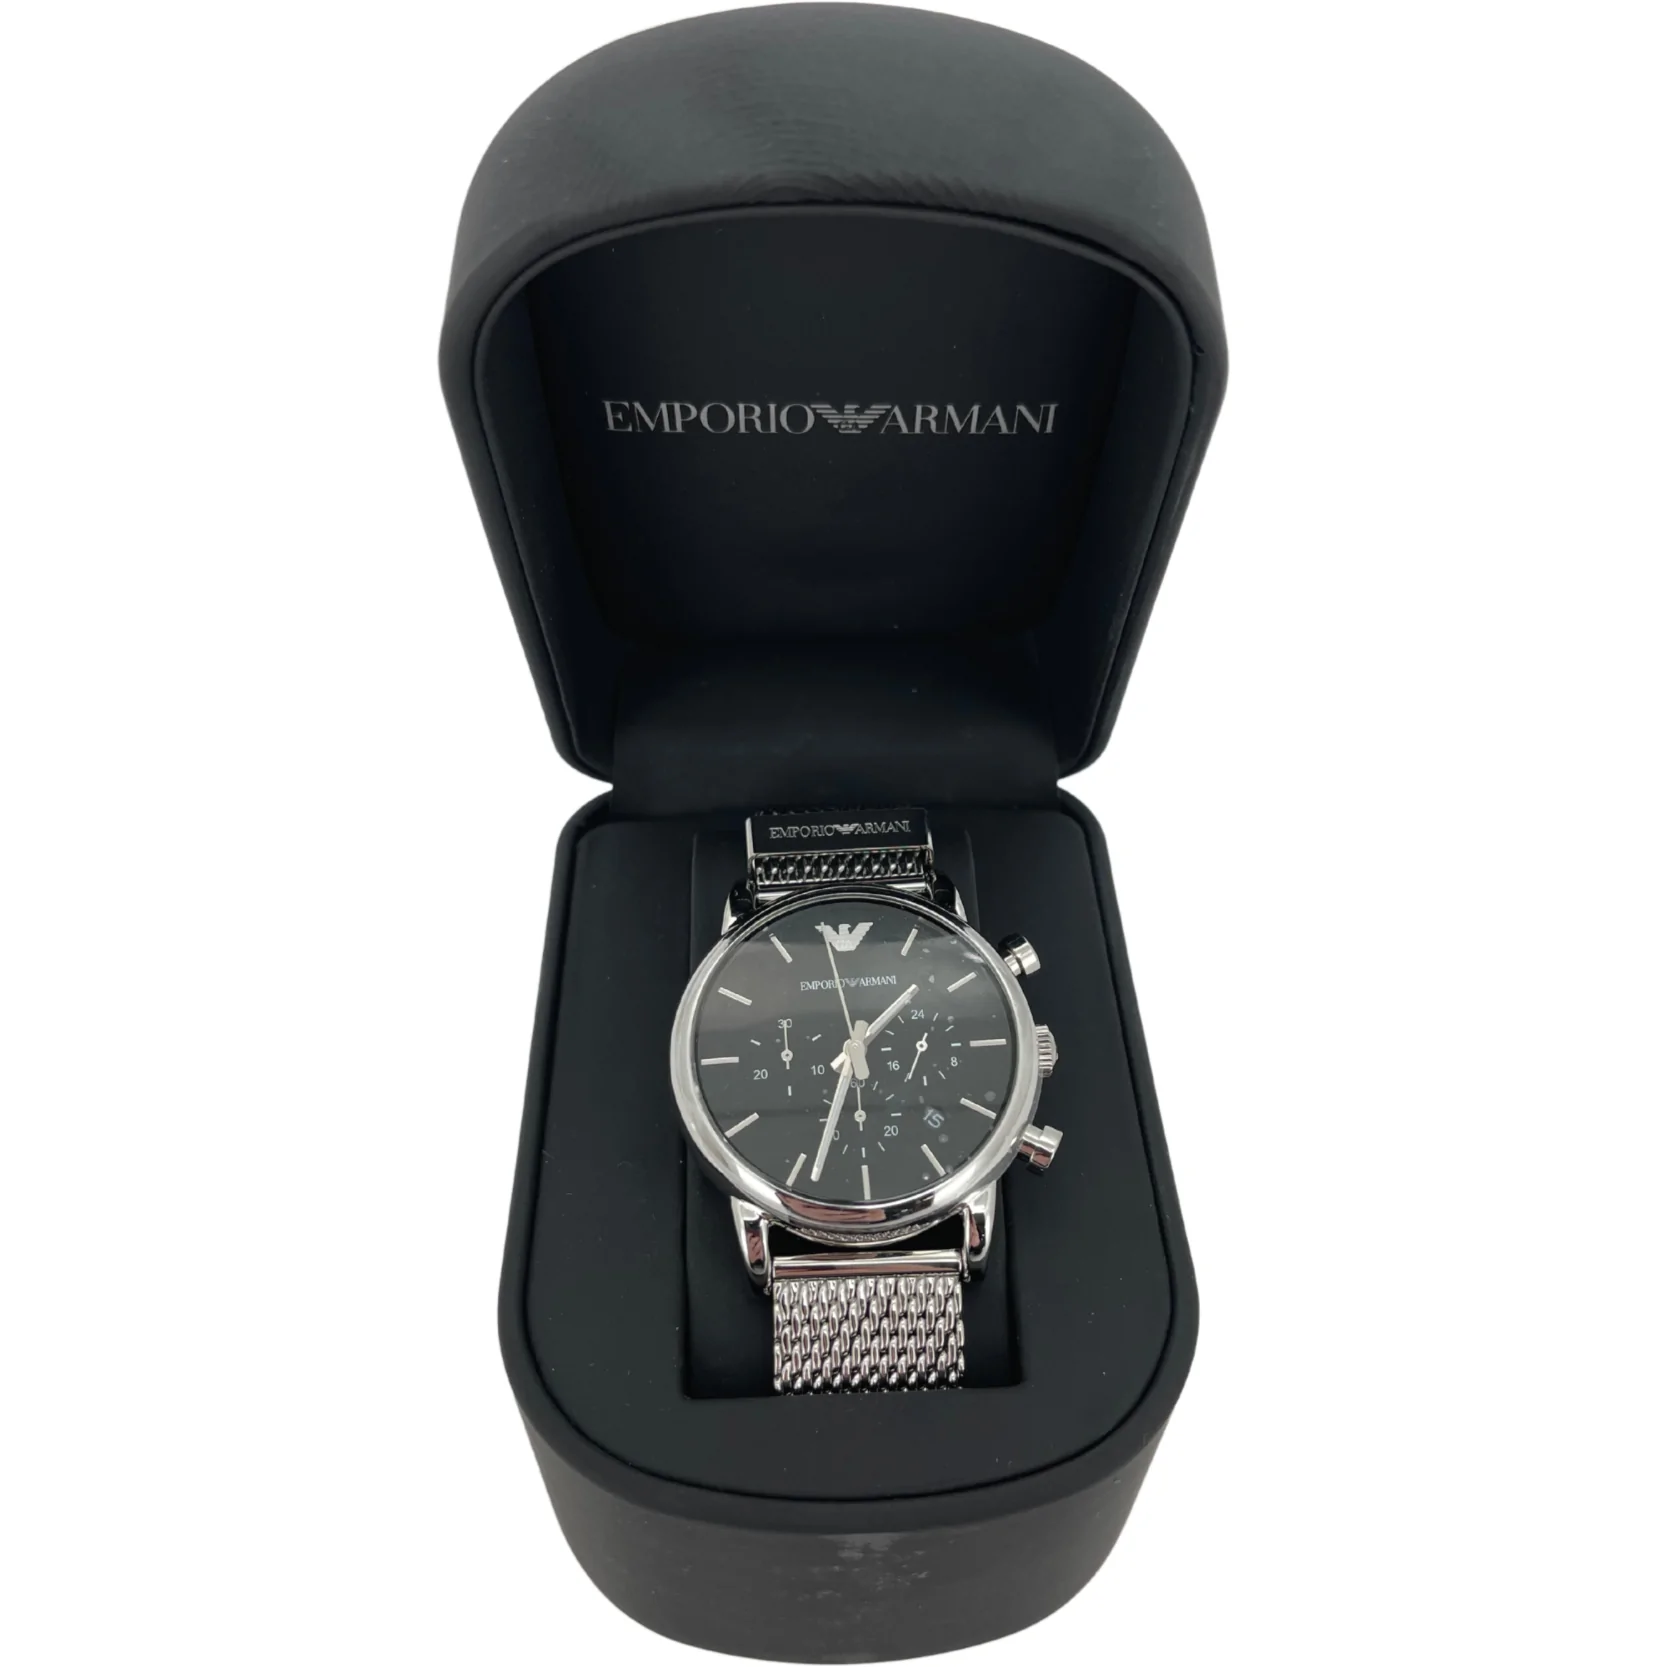 Emporio Armani Men's Wrist Watch / Silver / AR1811 / Analog Display / Chronograph Watch **DEALS**